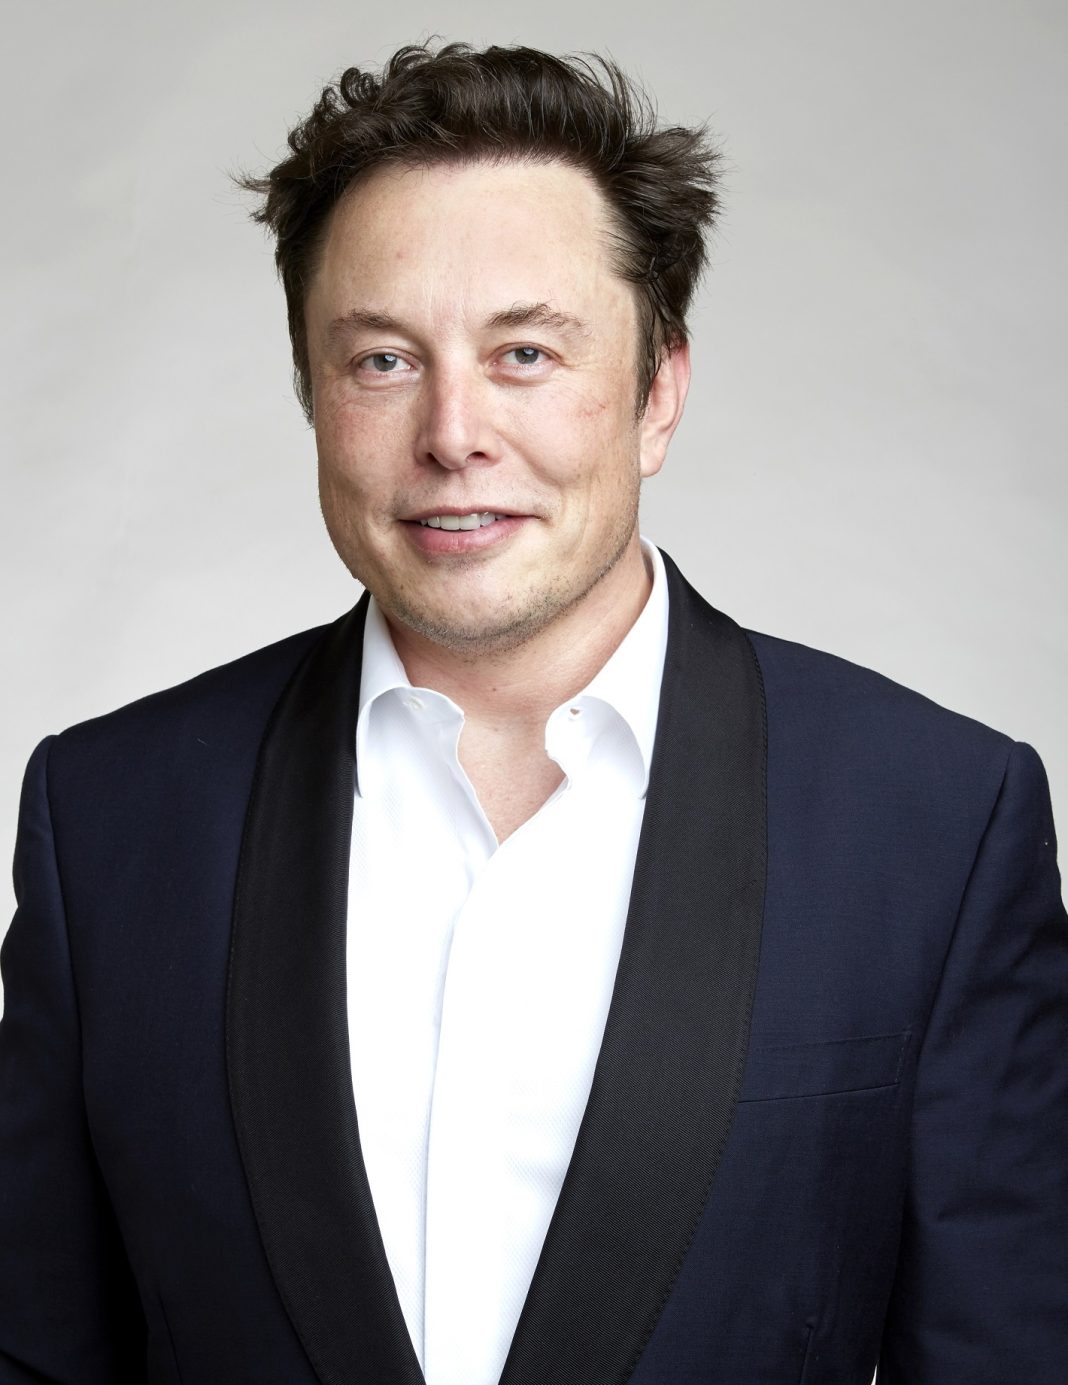 Elon Musk net worth